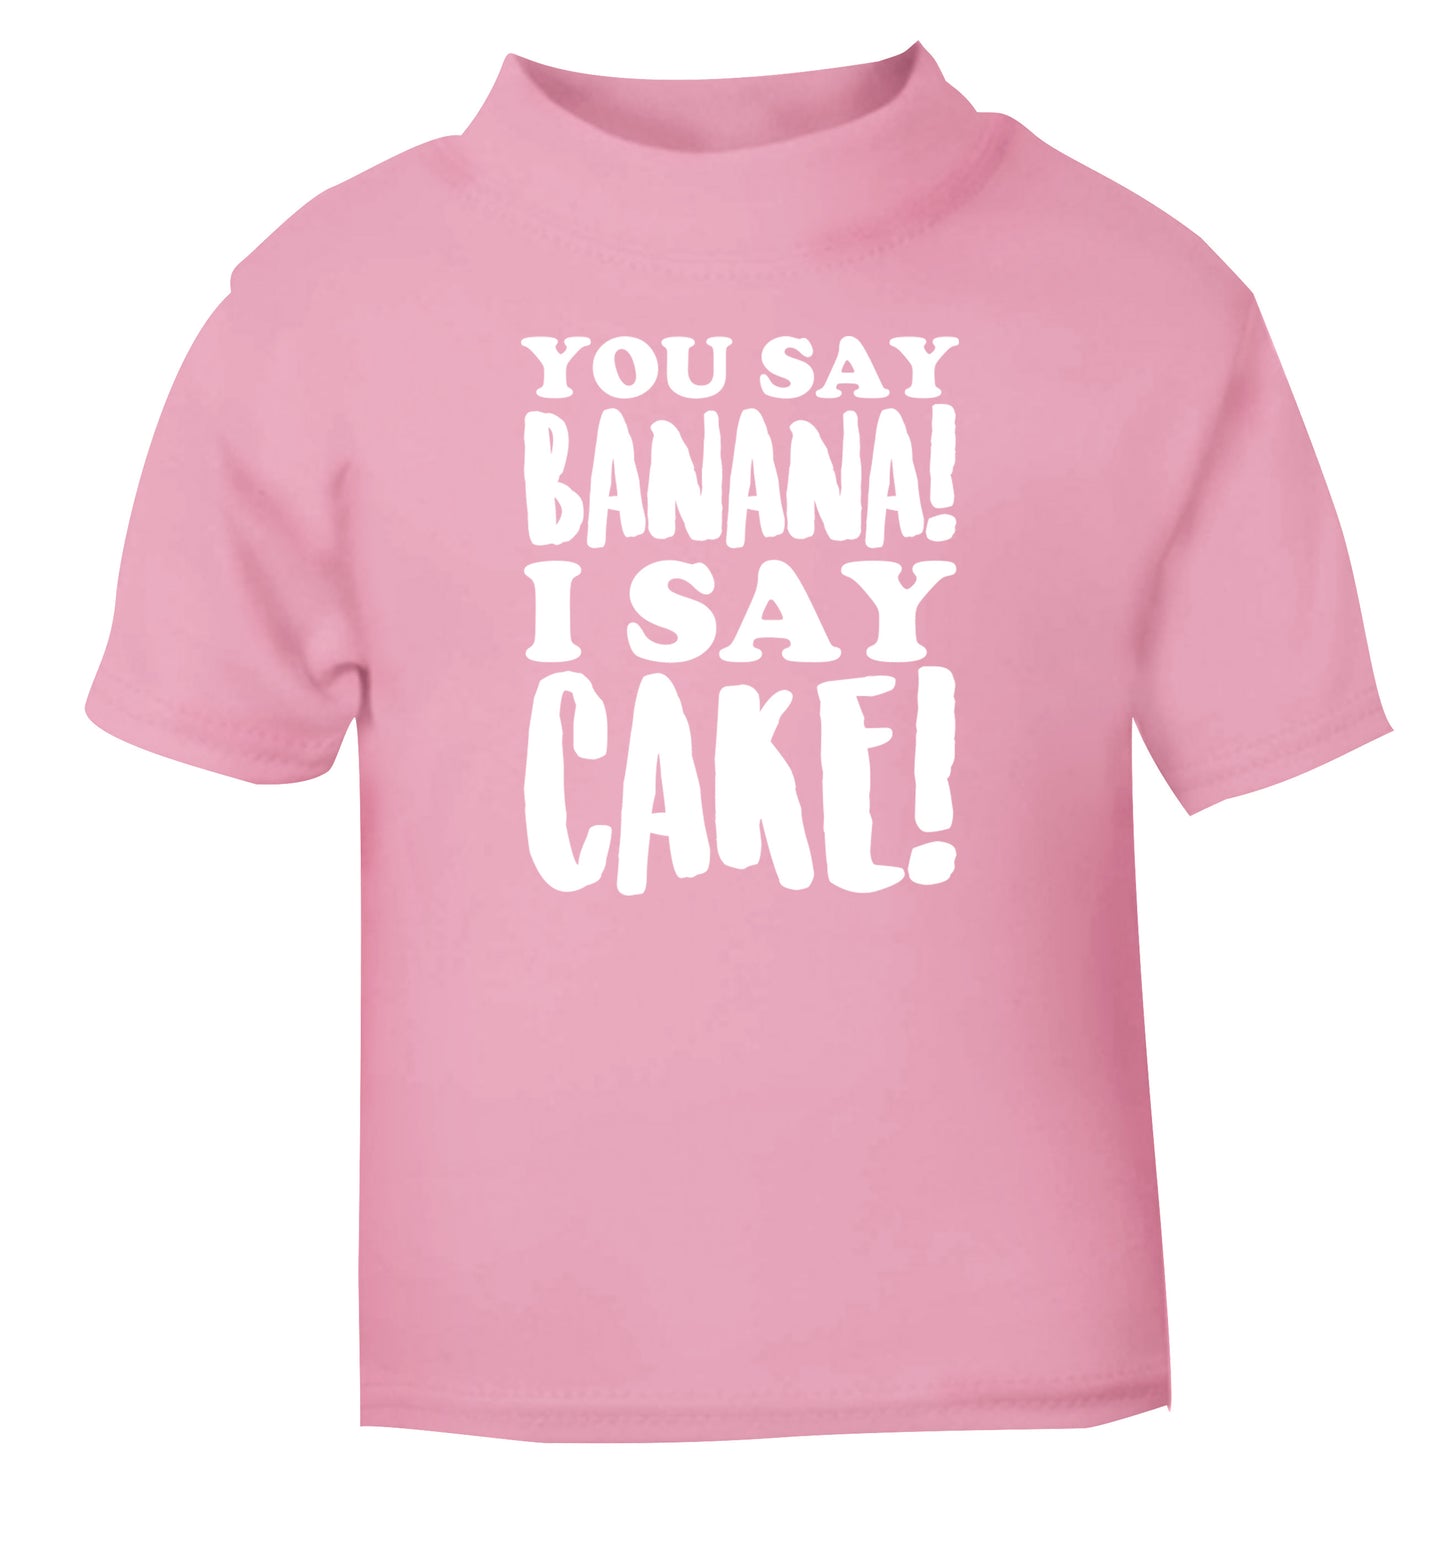 You say banana I say cake! light pink Baby Toddler Tshirt 2 Years